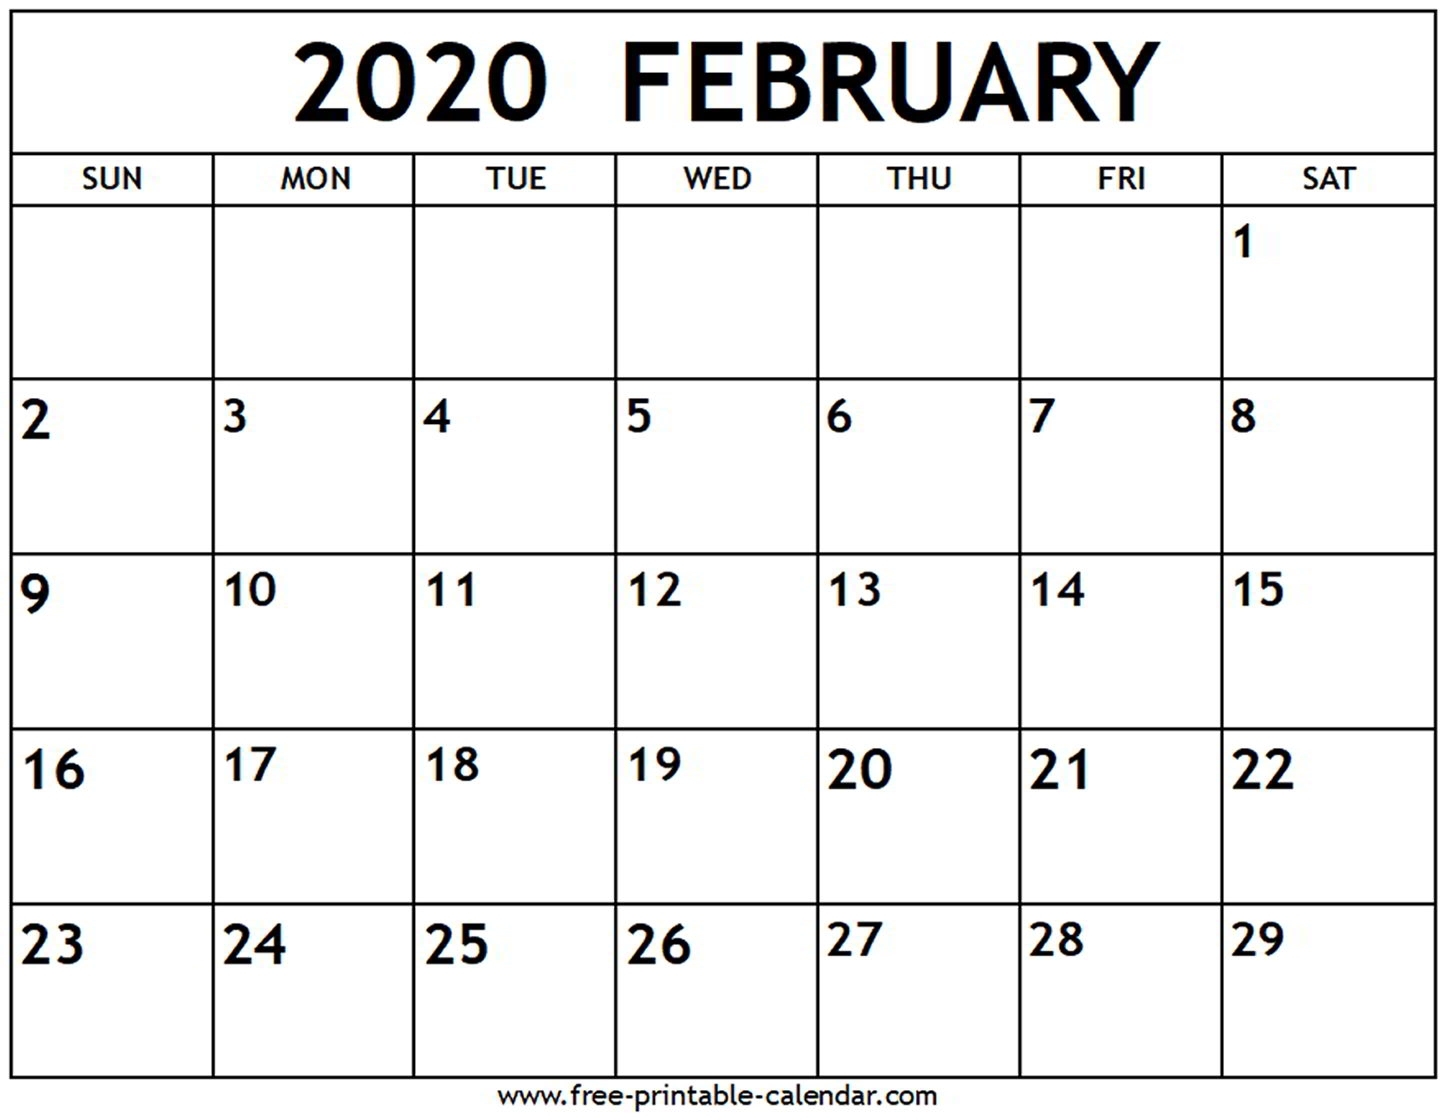 Feb 2020 Calendars Free Printable | Calendar Template 2021